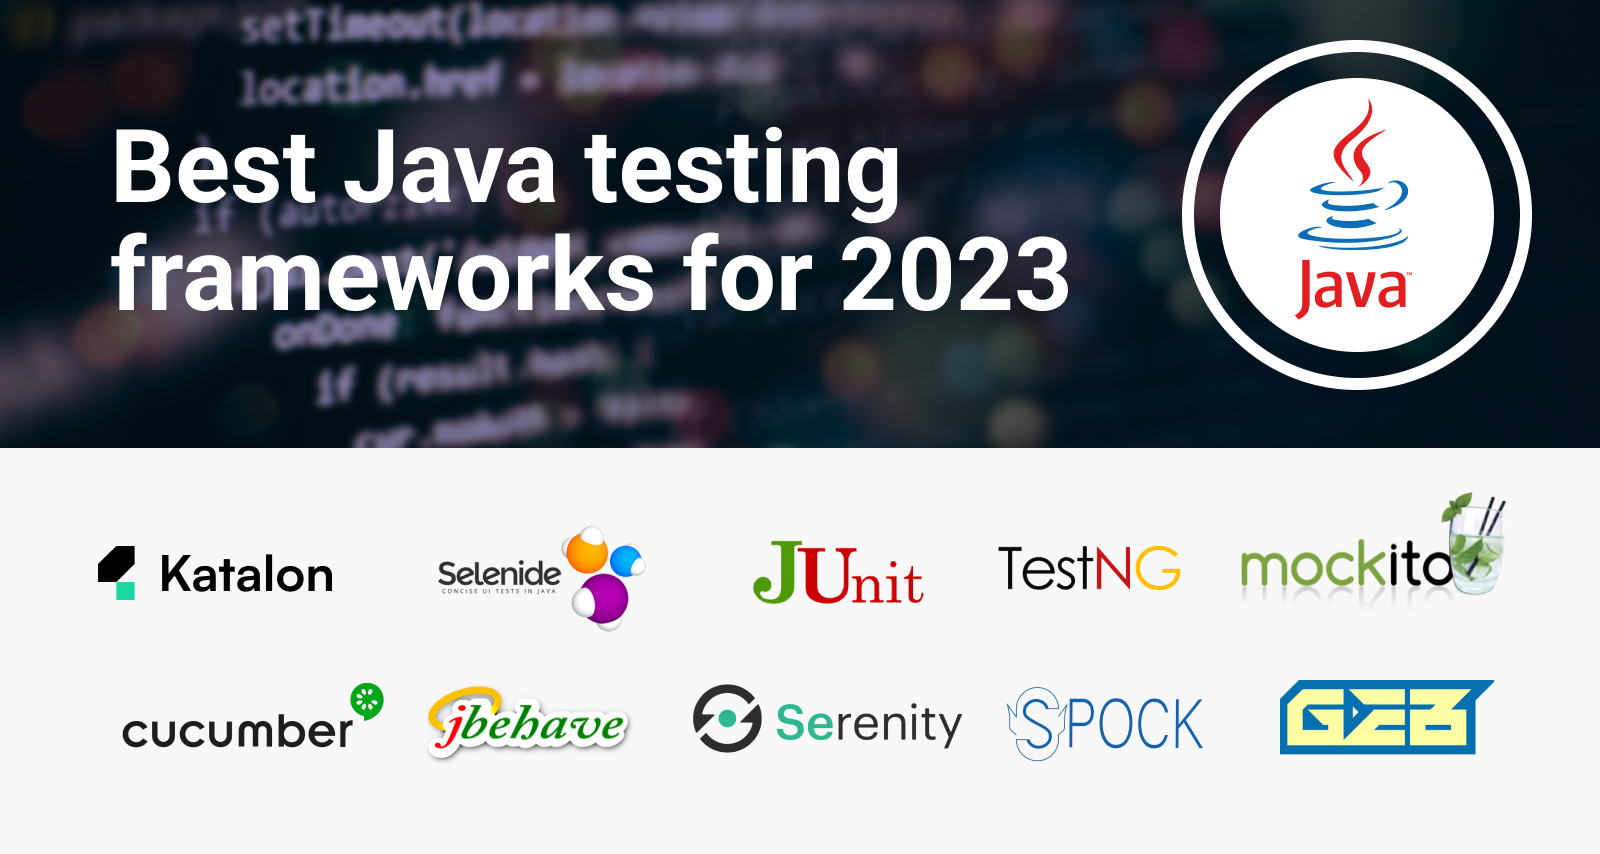 Best Java testing frameworks for 2023